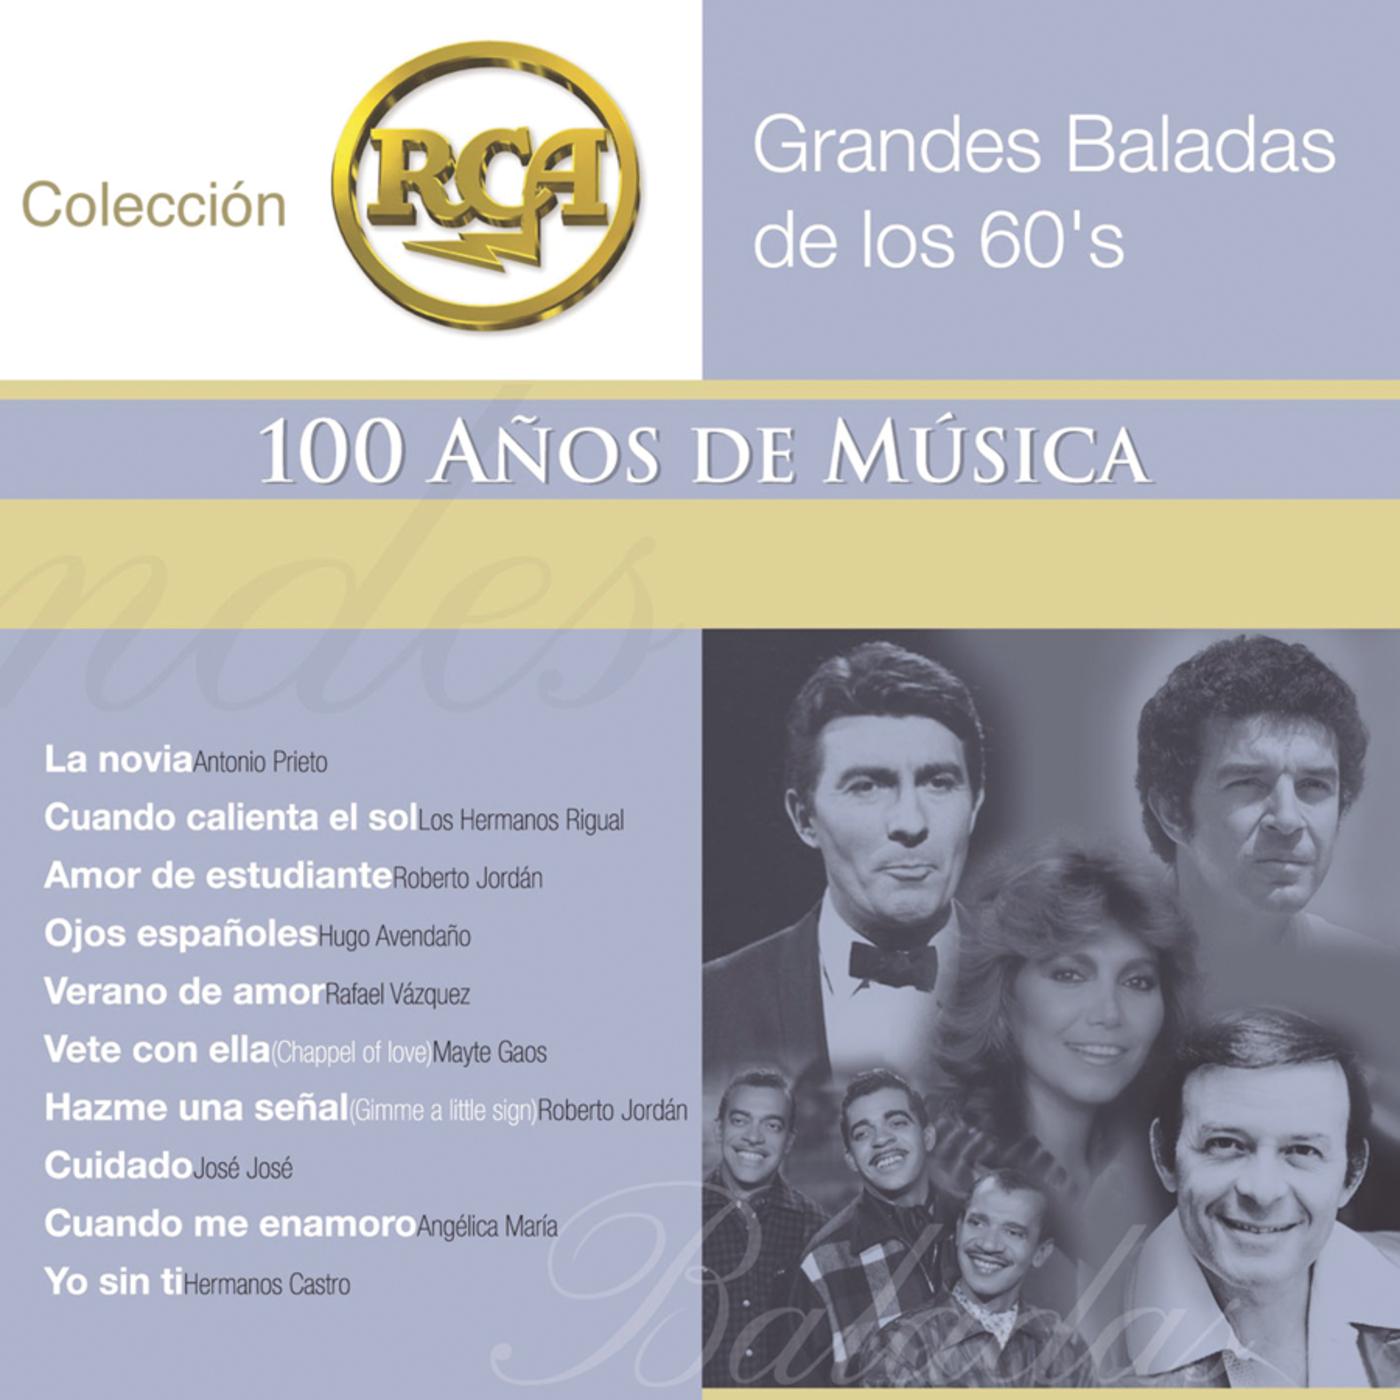 RCA 100 Anos De Musica - Segunda Parte ( Grandes Baladas De Los 60s)